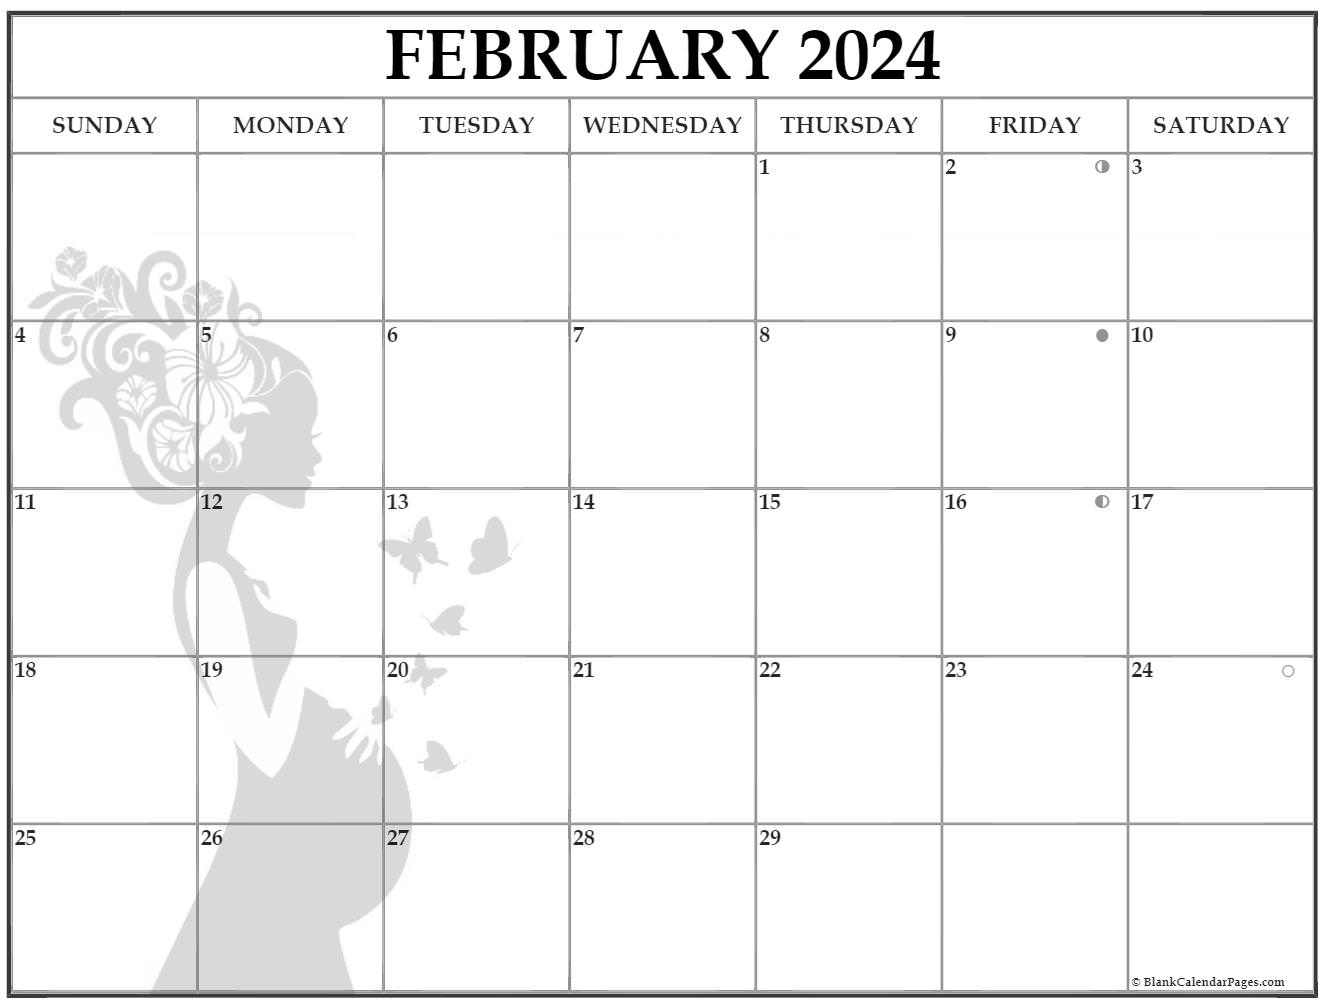 February 2020 Pregnancy Calendar | Fertility Calendar